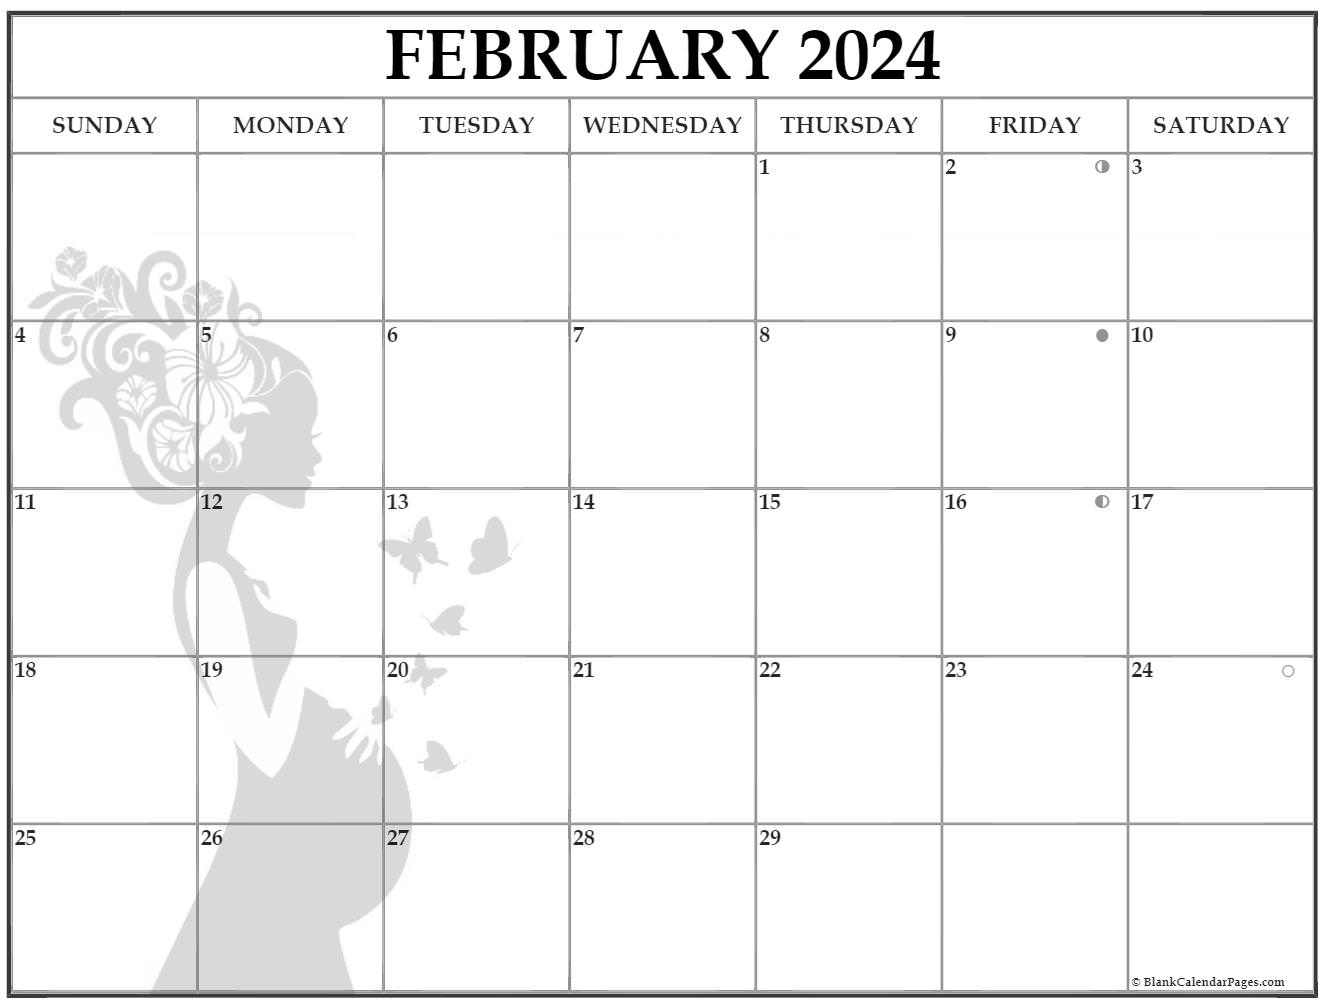 February 2020 Pregnancy Calendar | Fertility Calendar